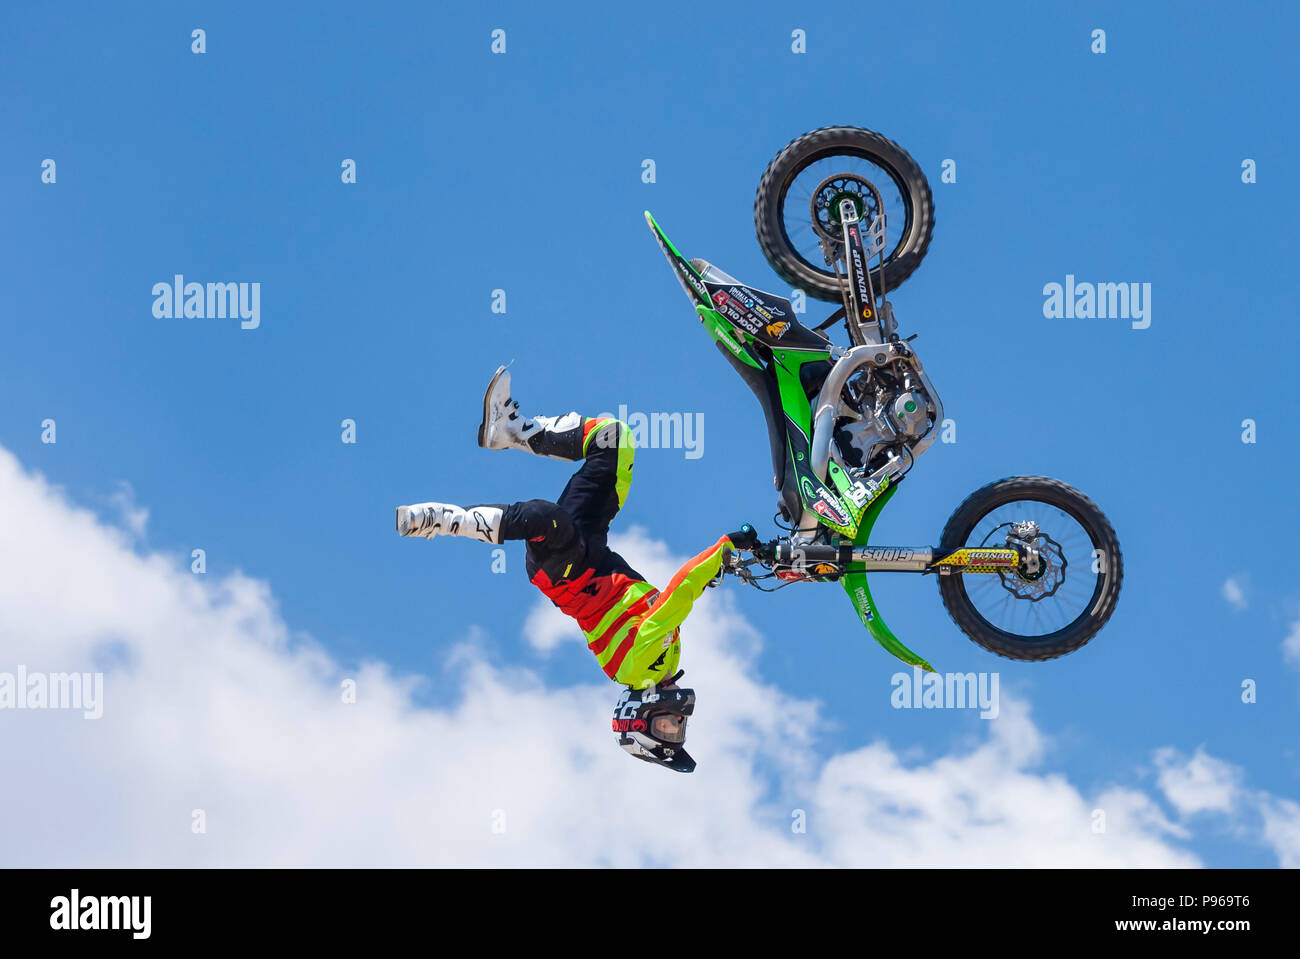 Goodwood, West Sussex, UK, 14. Juli 2018. Freestyle Motocross am Gas arena Goodwood Festival der Geschwindigkeit. © Tony Watson/Alamy leben Nachrichten Stockfoto